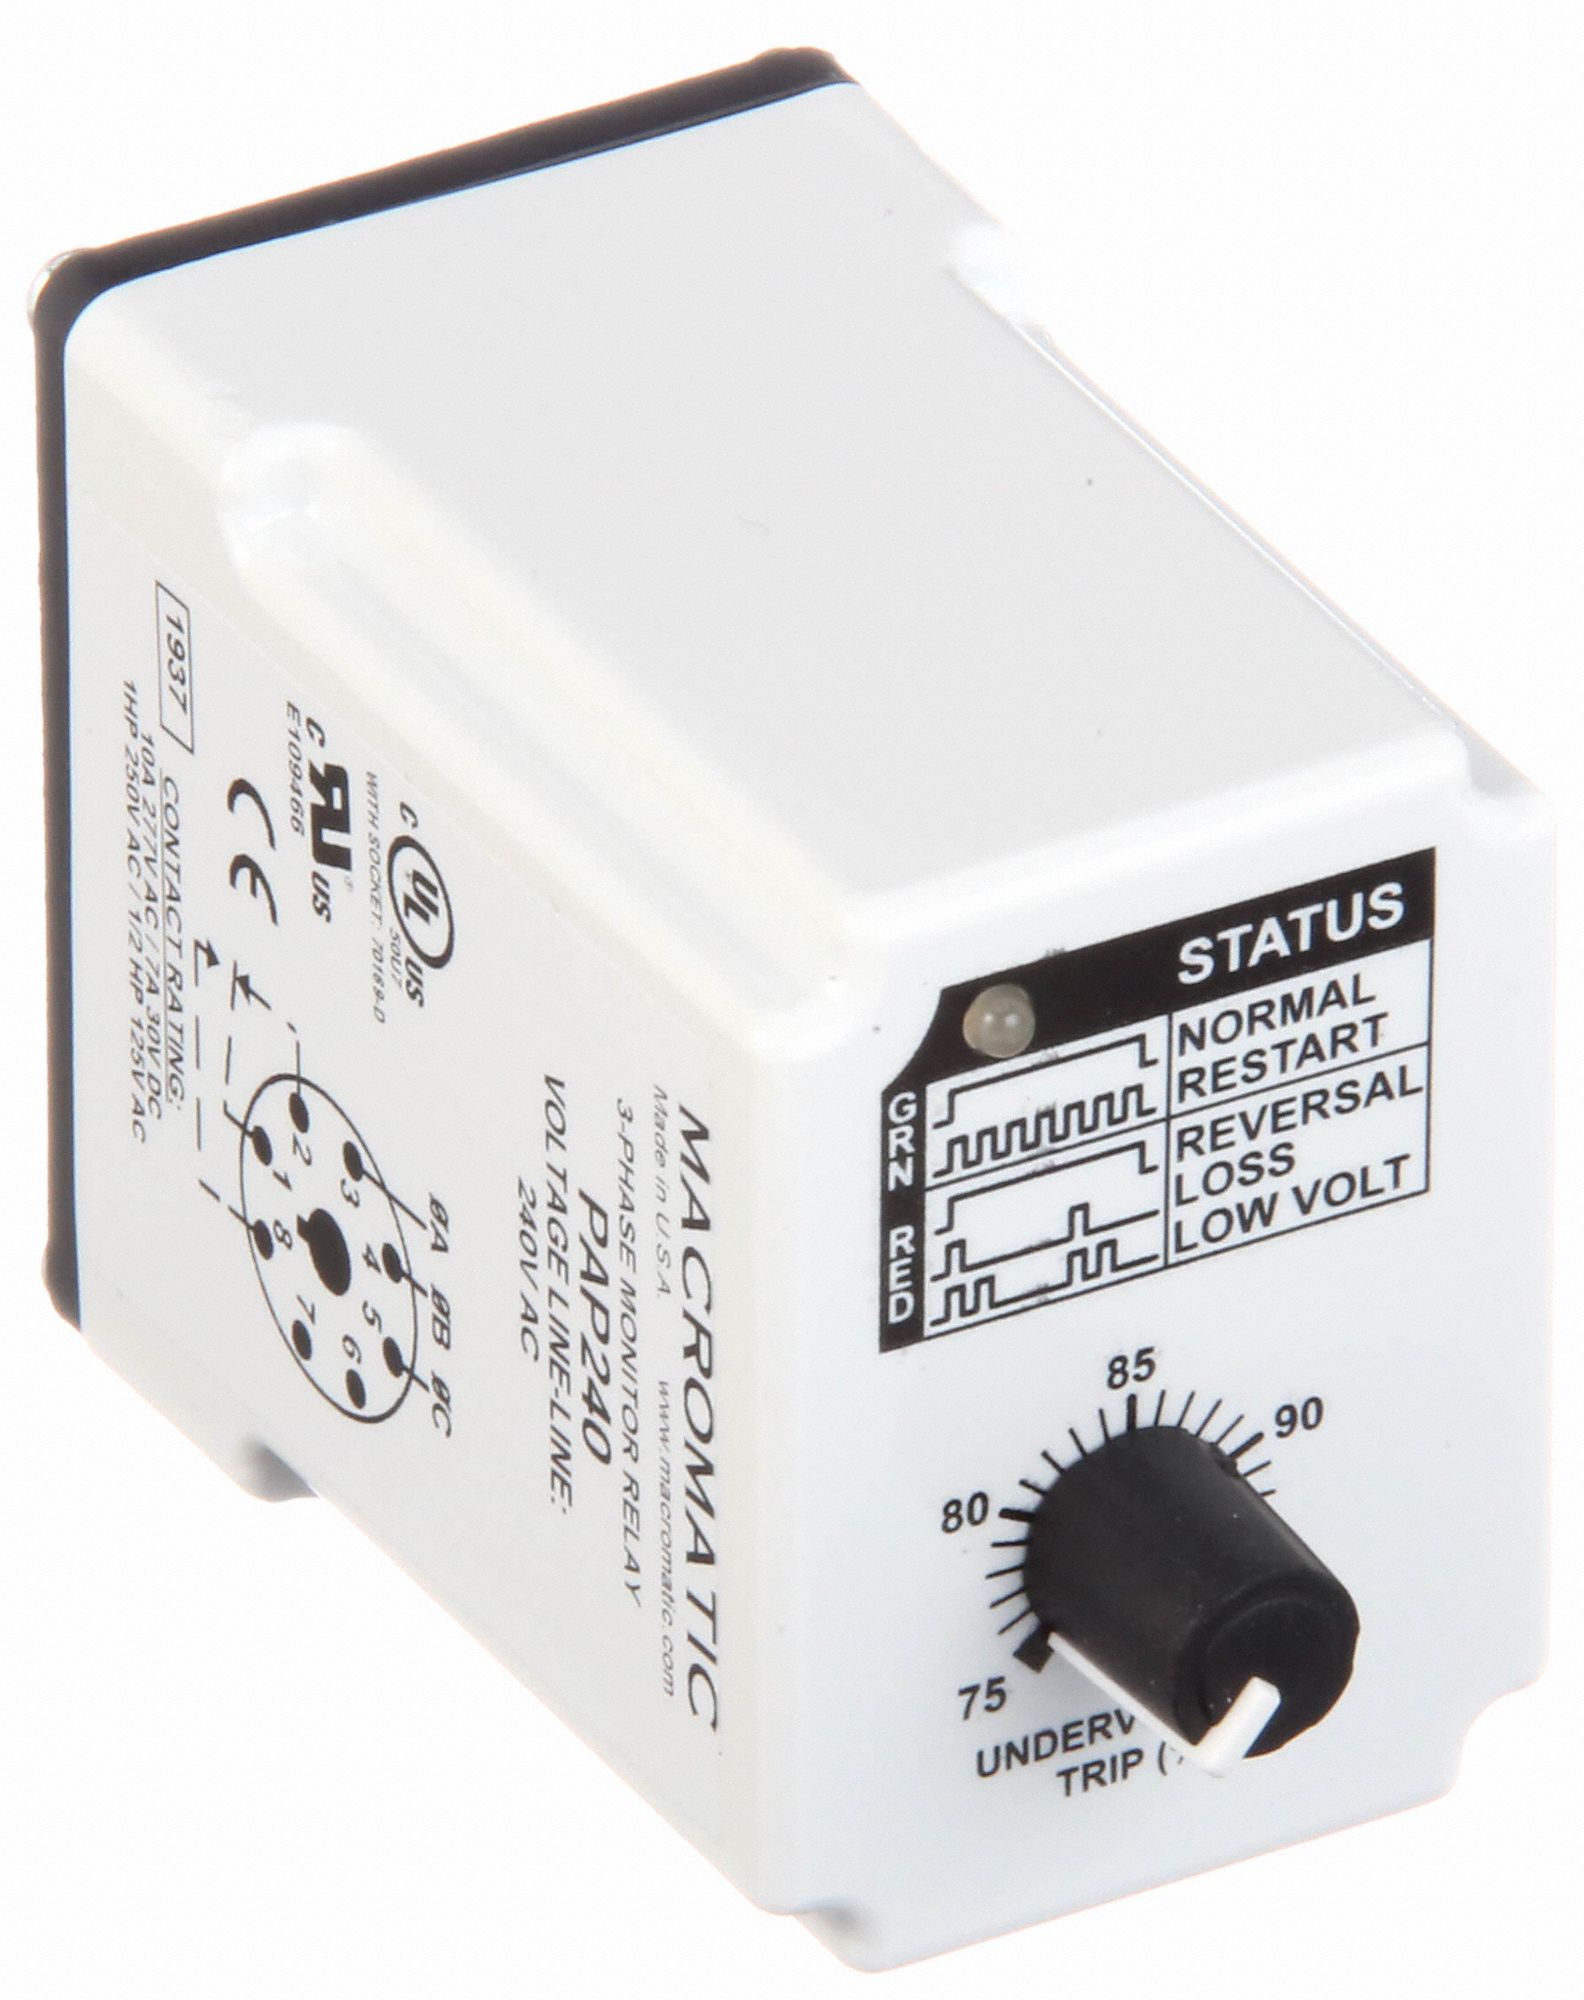 SSAC 240VAC Three Phase Line Voltage Monitor with Base Socket PLM6405 